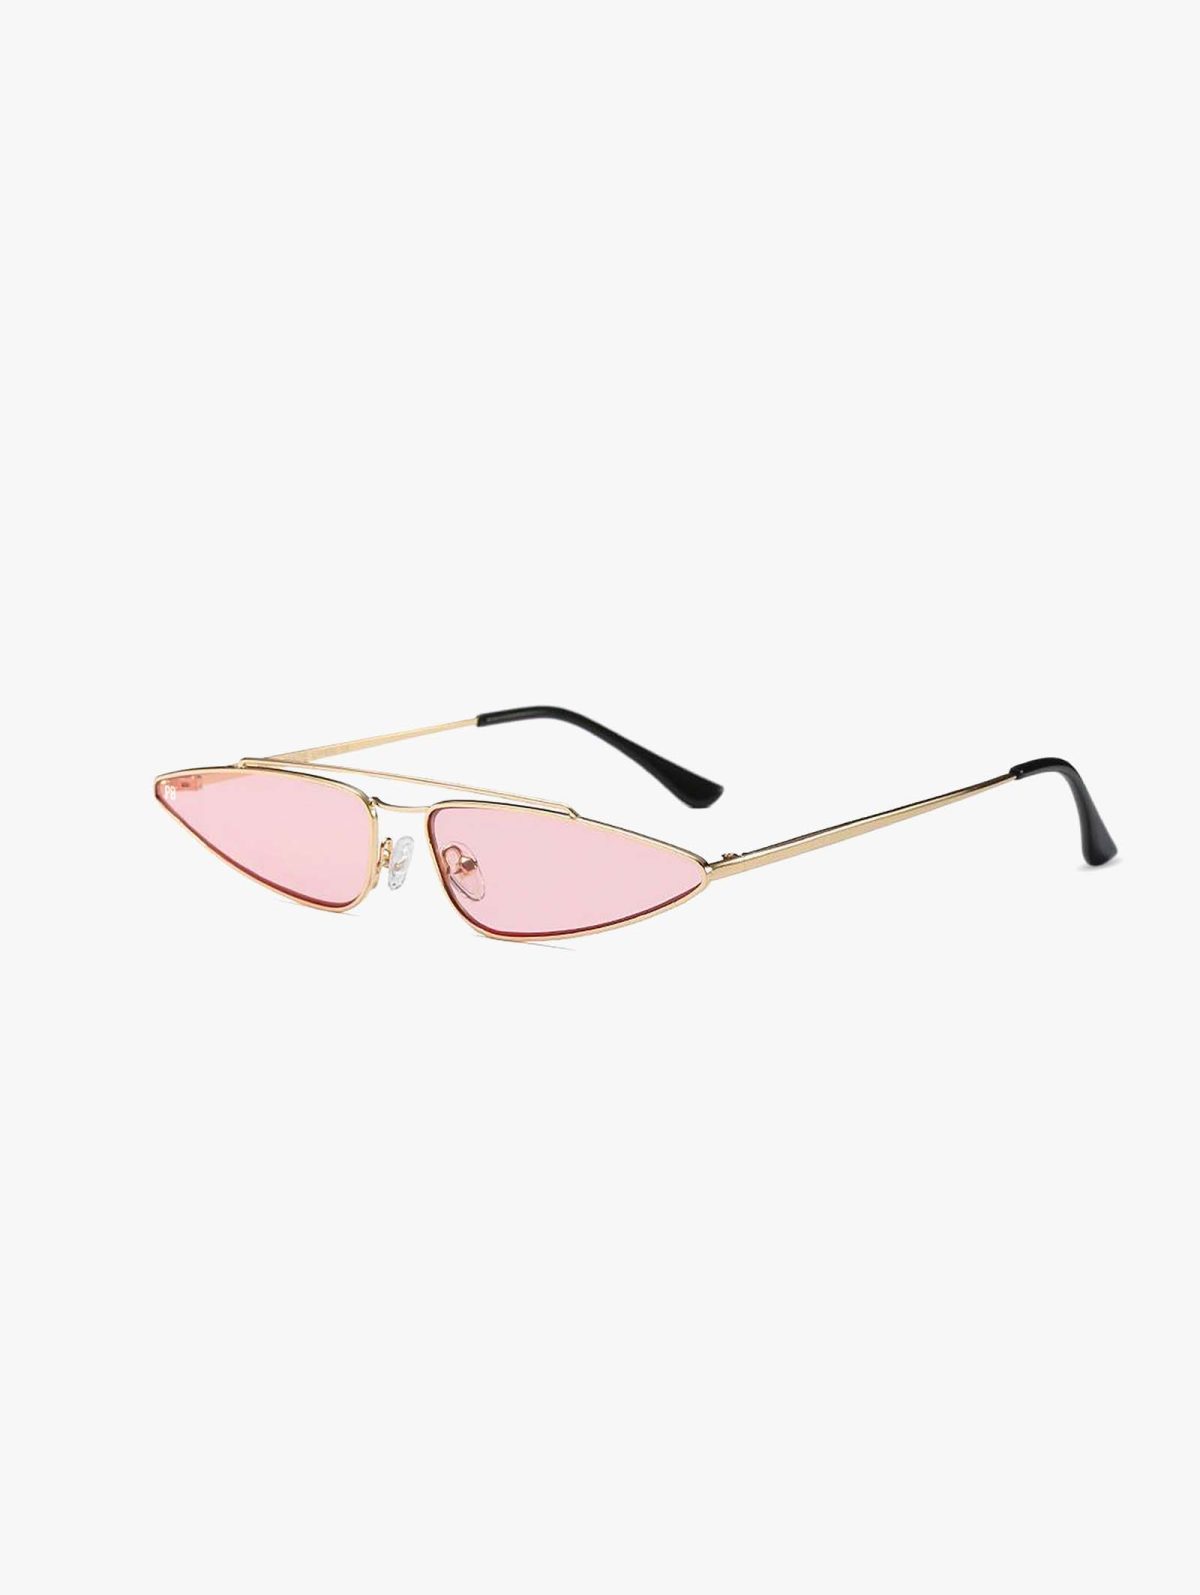 festivalbril pb sunglasses